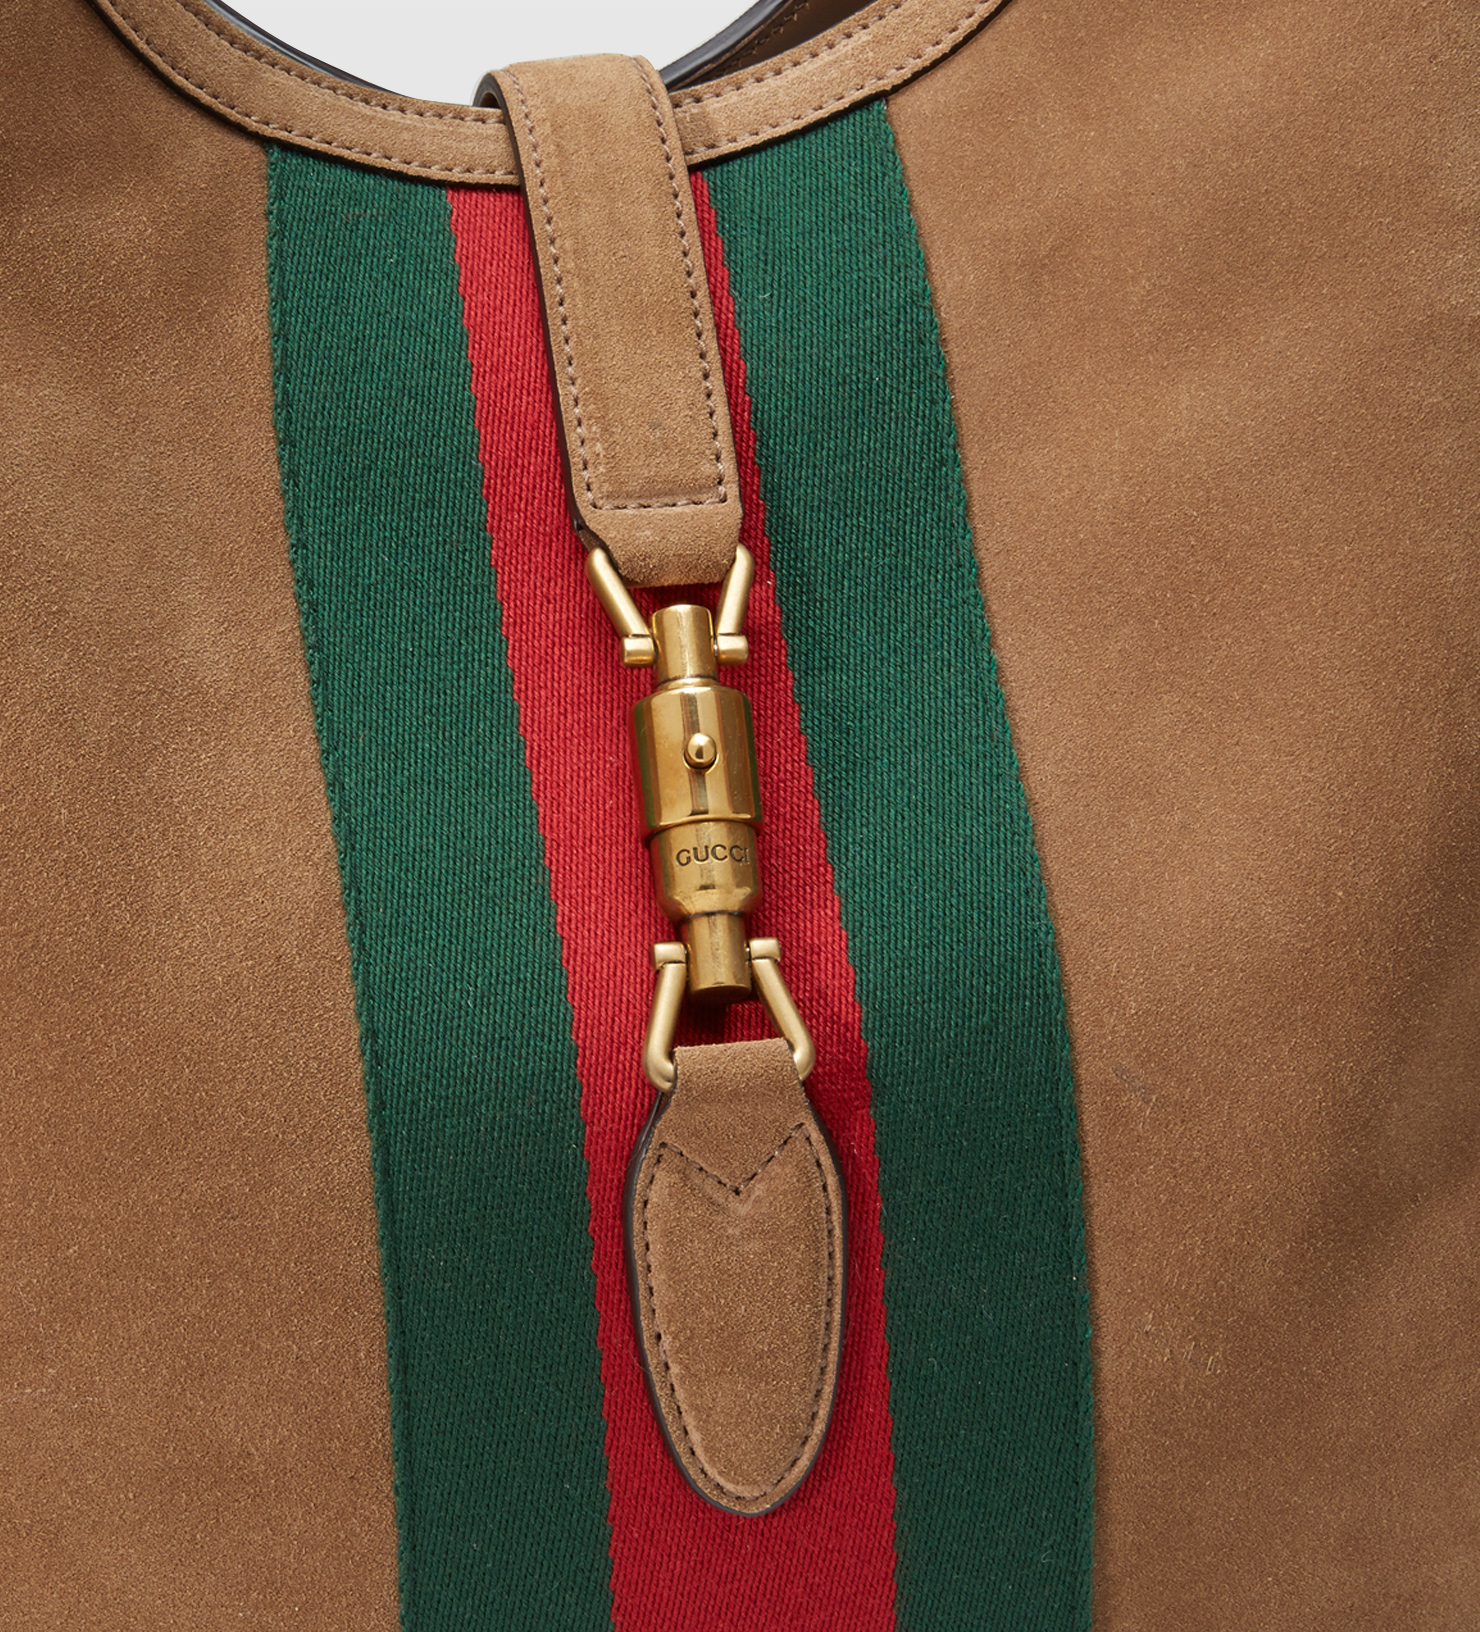 Gucci Hobo Large Jockey 868202 Brown Suede Leather Shoulder Bag, Gucci